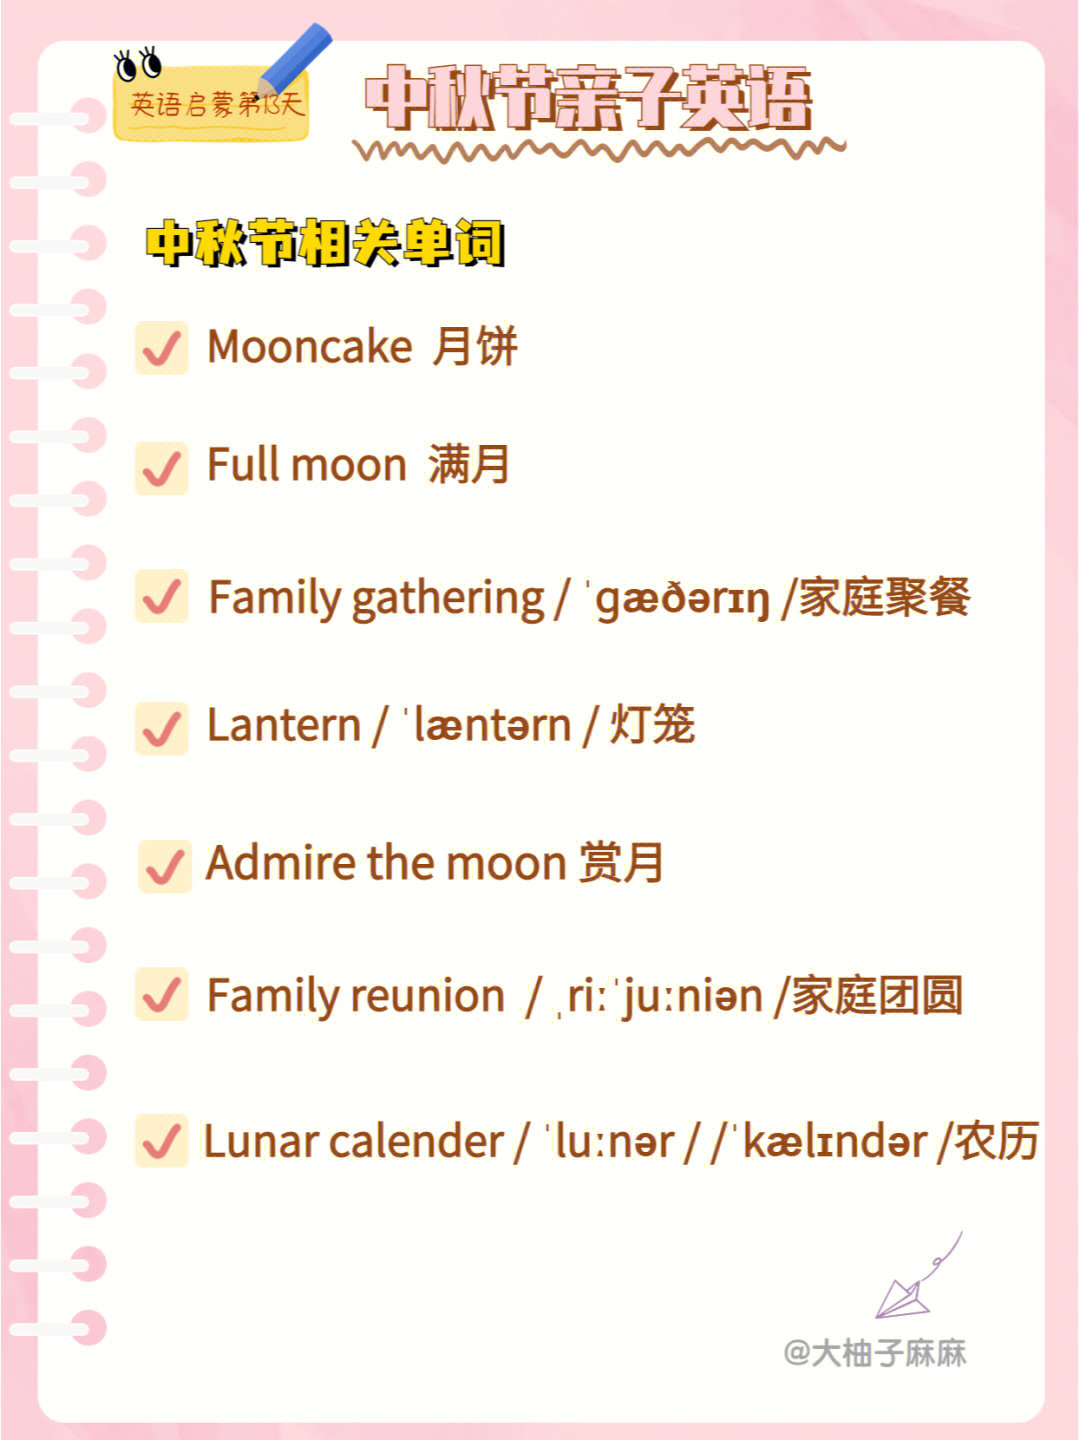 the moon赏月family reunion家庭团圆lunar calender农历